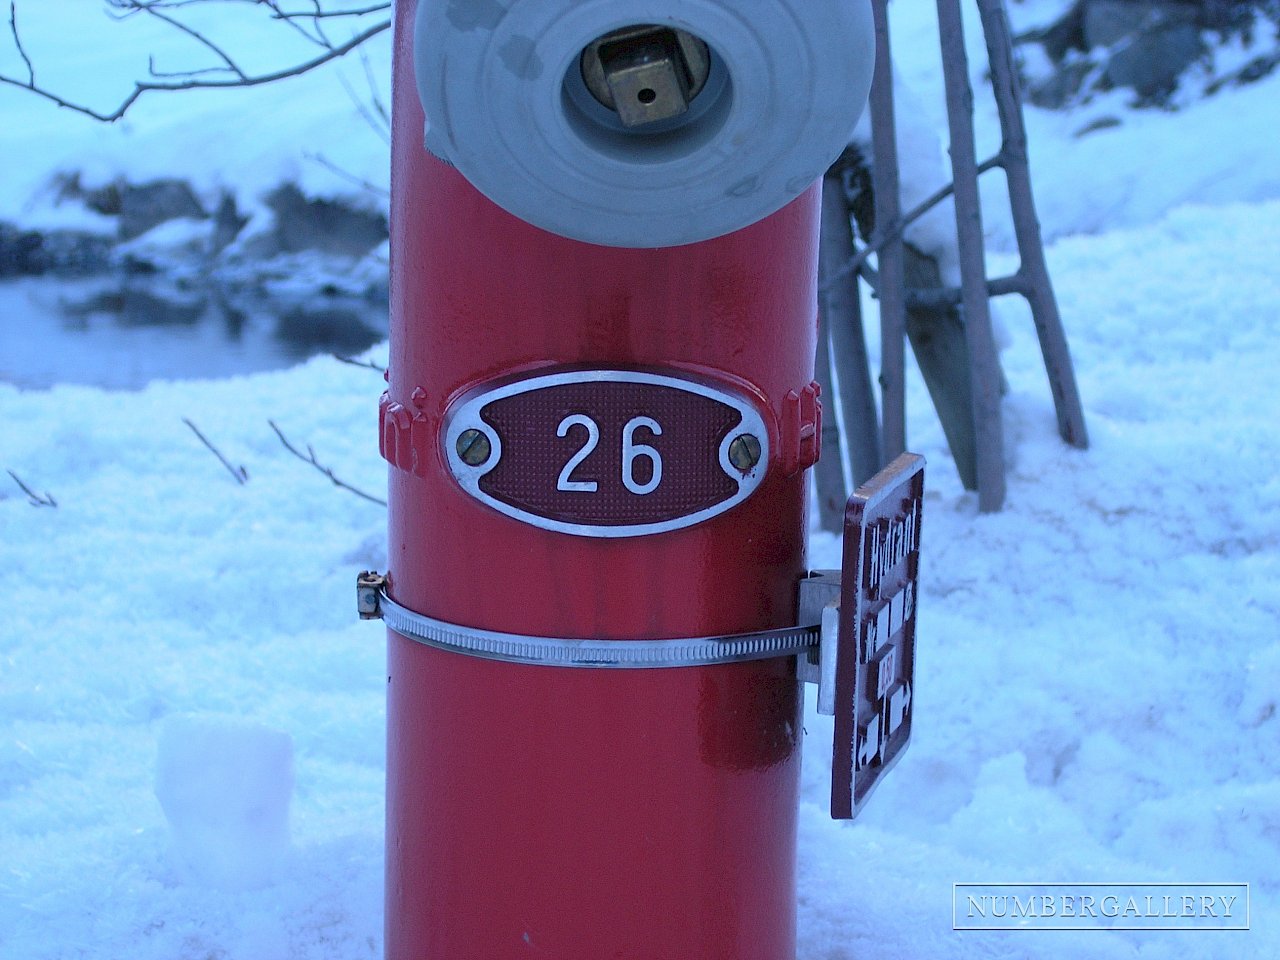 Hydrant in Kandersteg